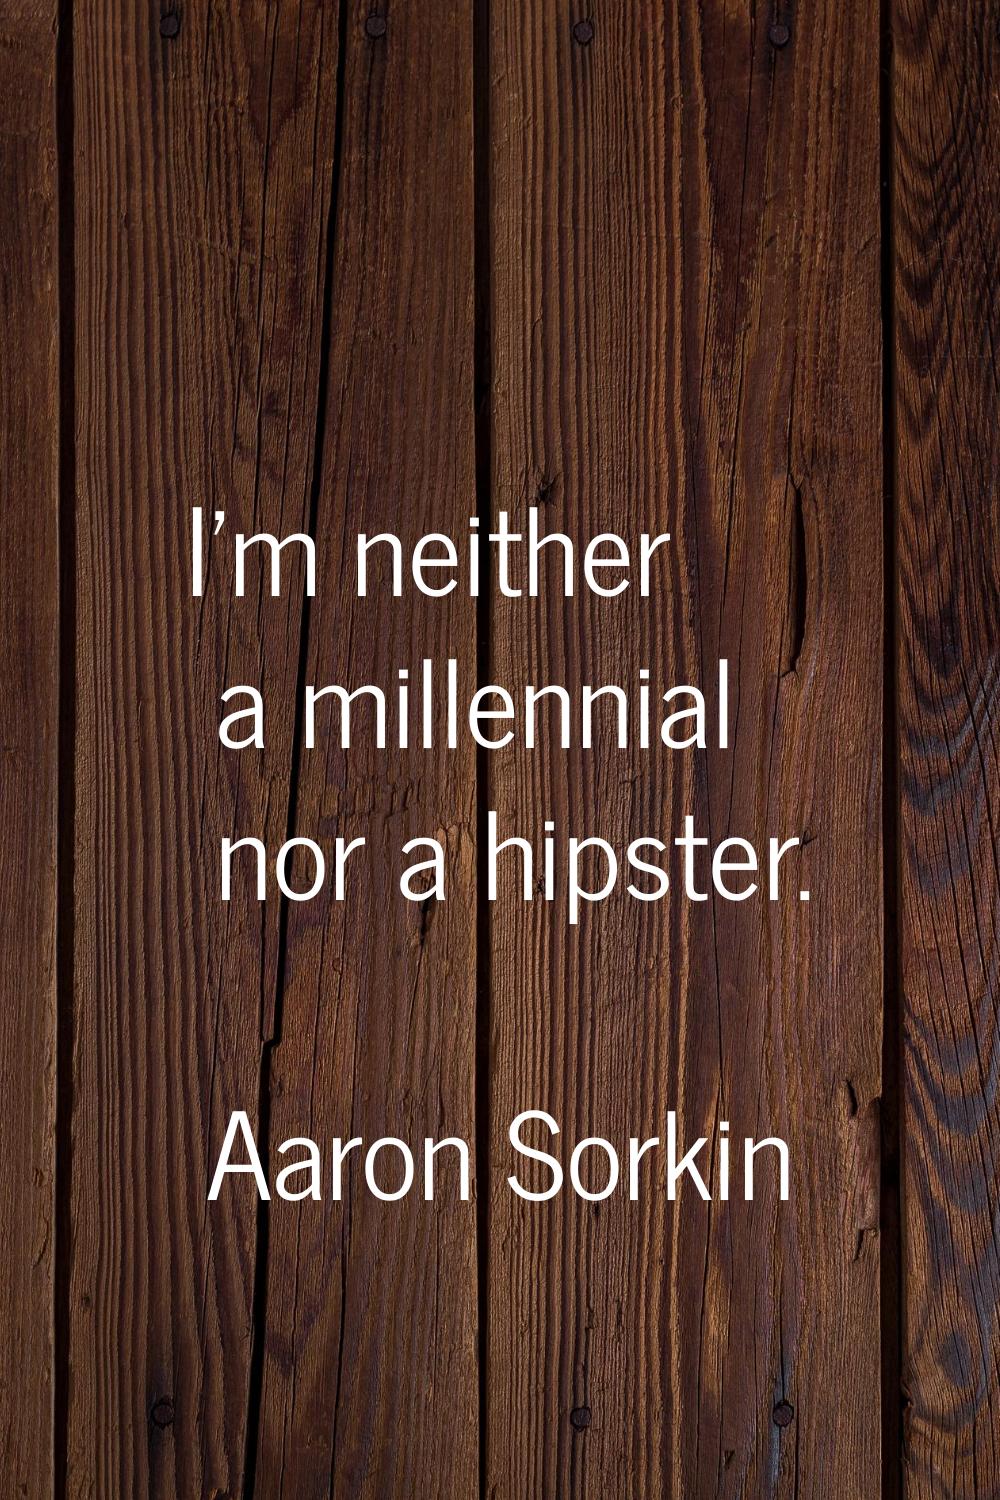 I'm neither a millennial nor a hipster.